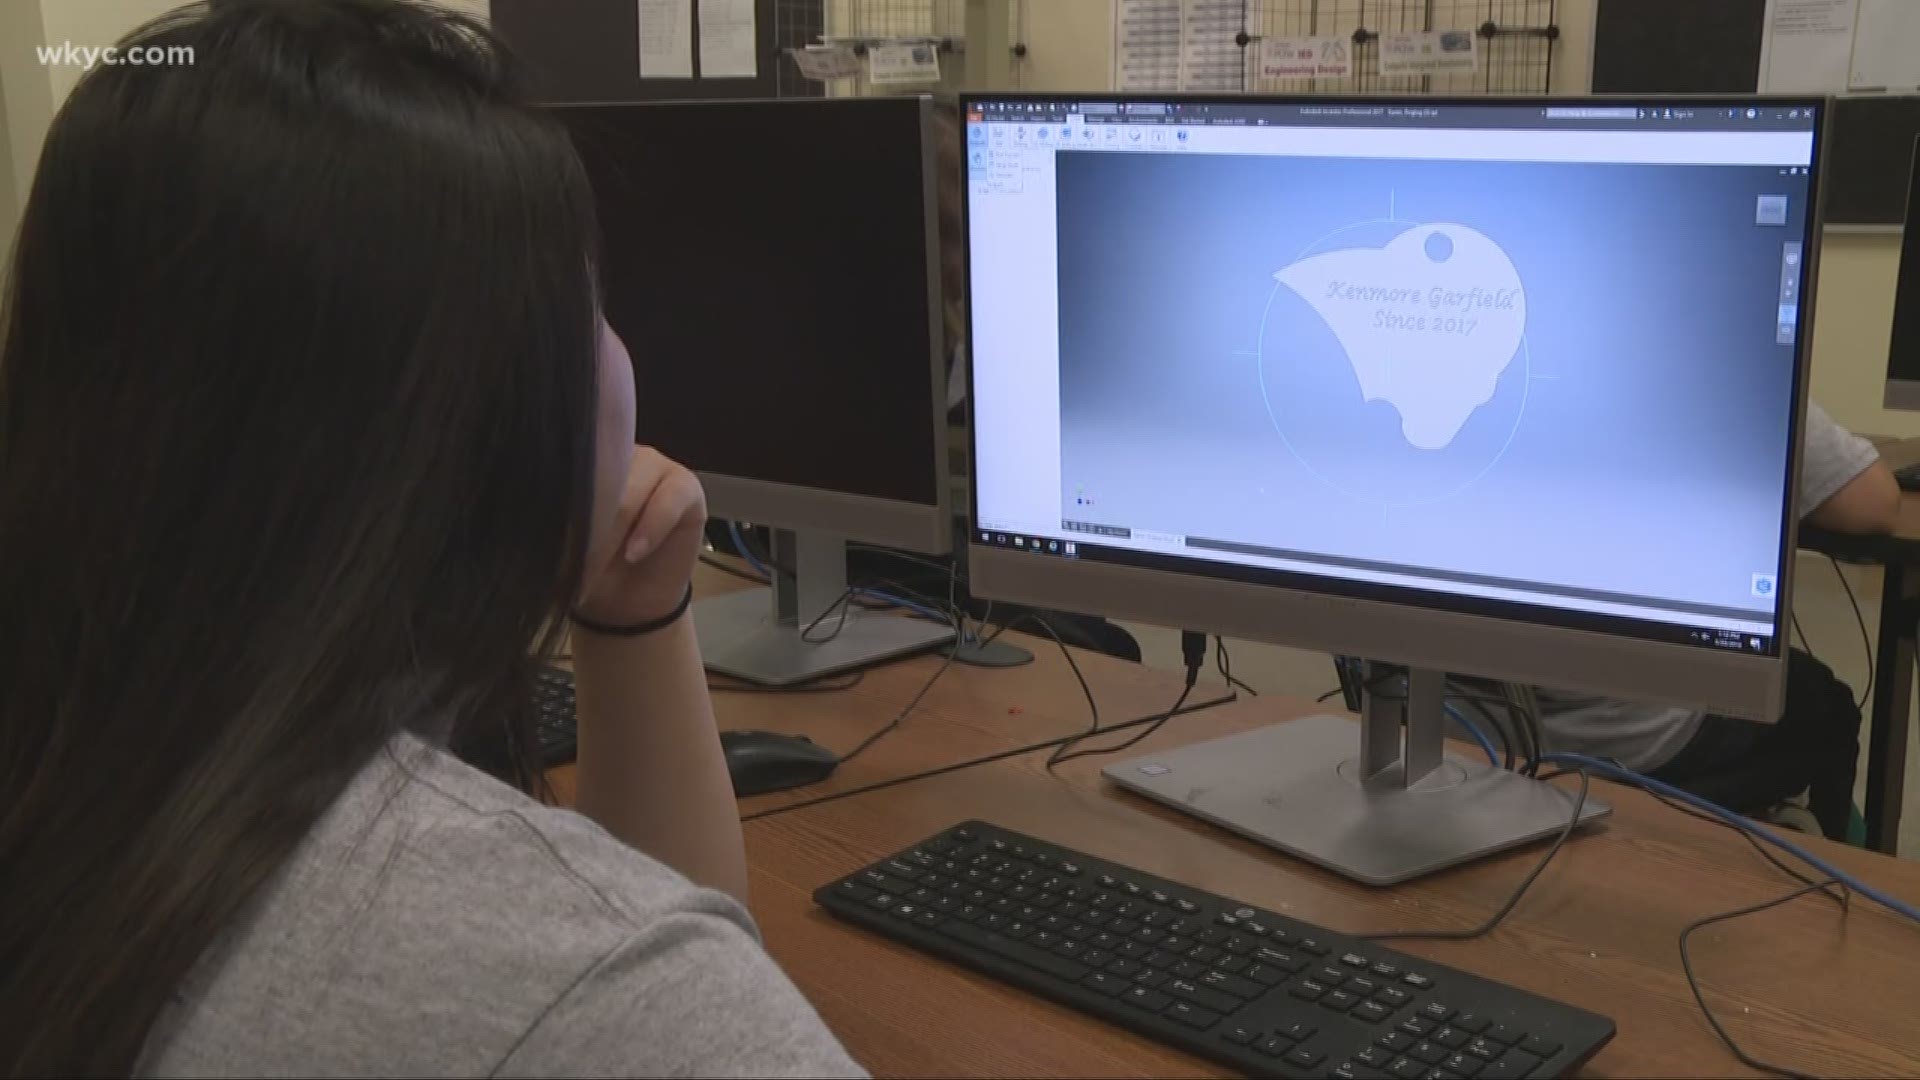 Girls in STEM ' Teenagers explore manufacturing jobs